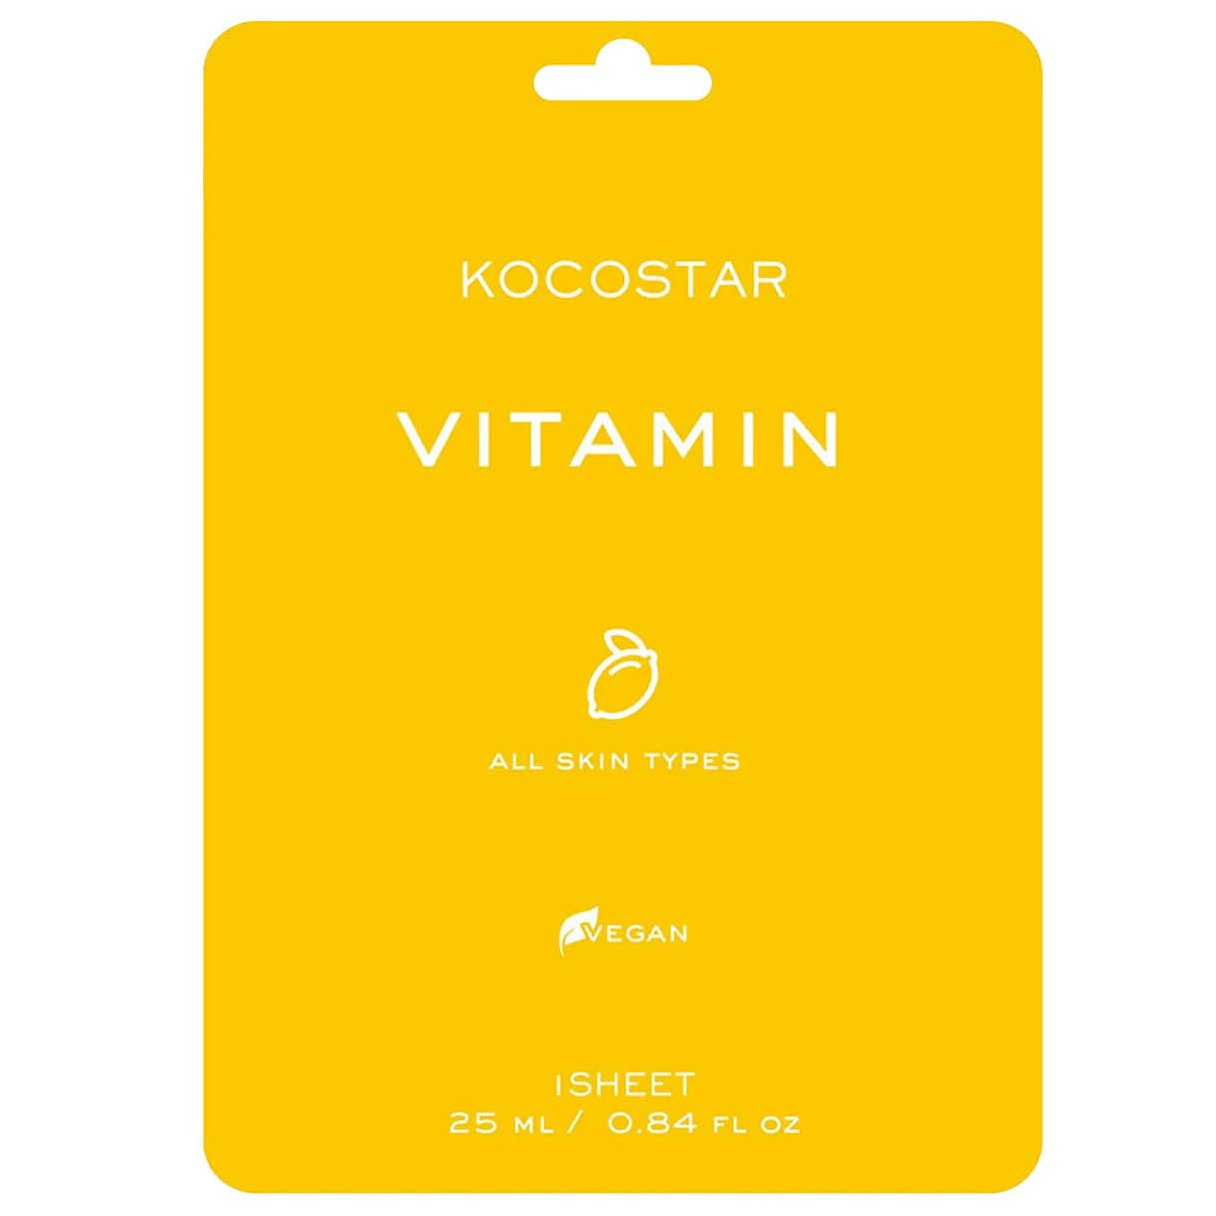 Kocostar Vitamin Face Mask Κωδ 5603 Εμποτισμένη Μάσκα Αναζωογόνησης & Λάμψης για Όλους τους Τύπους Δέρματος 1 Τεμάχιο